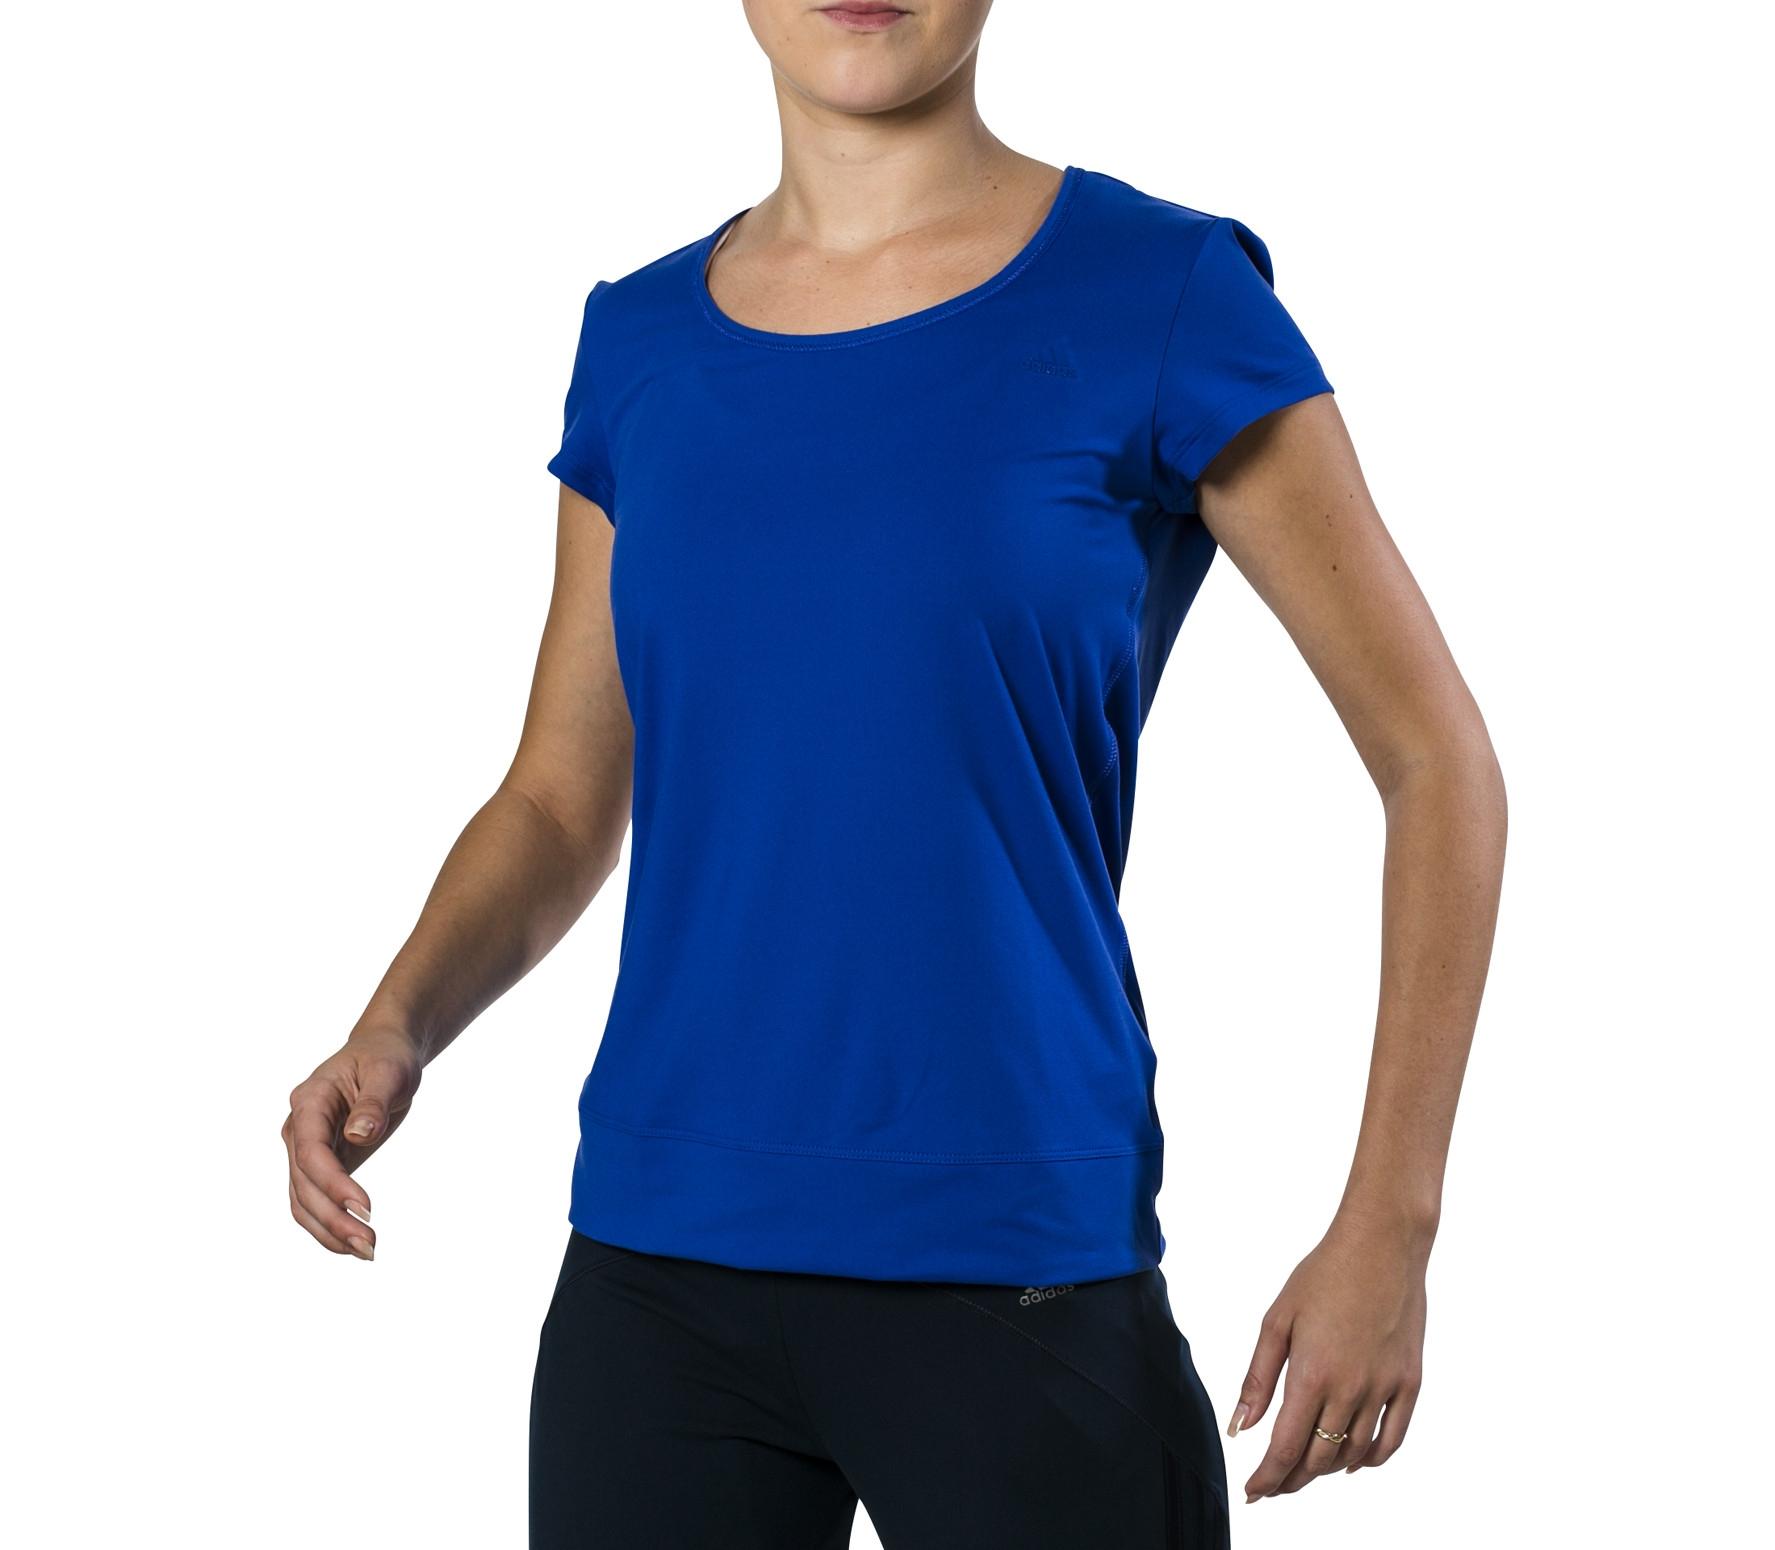 Foto Adidas - Camiseta Mujer Essentials - SS13 foto 910563